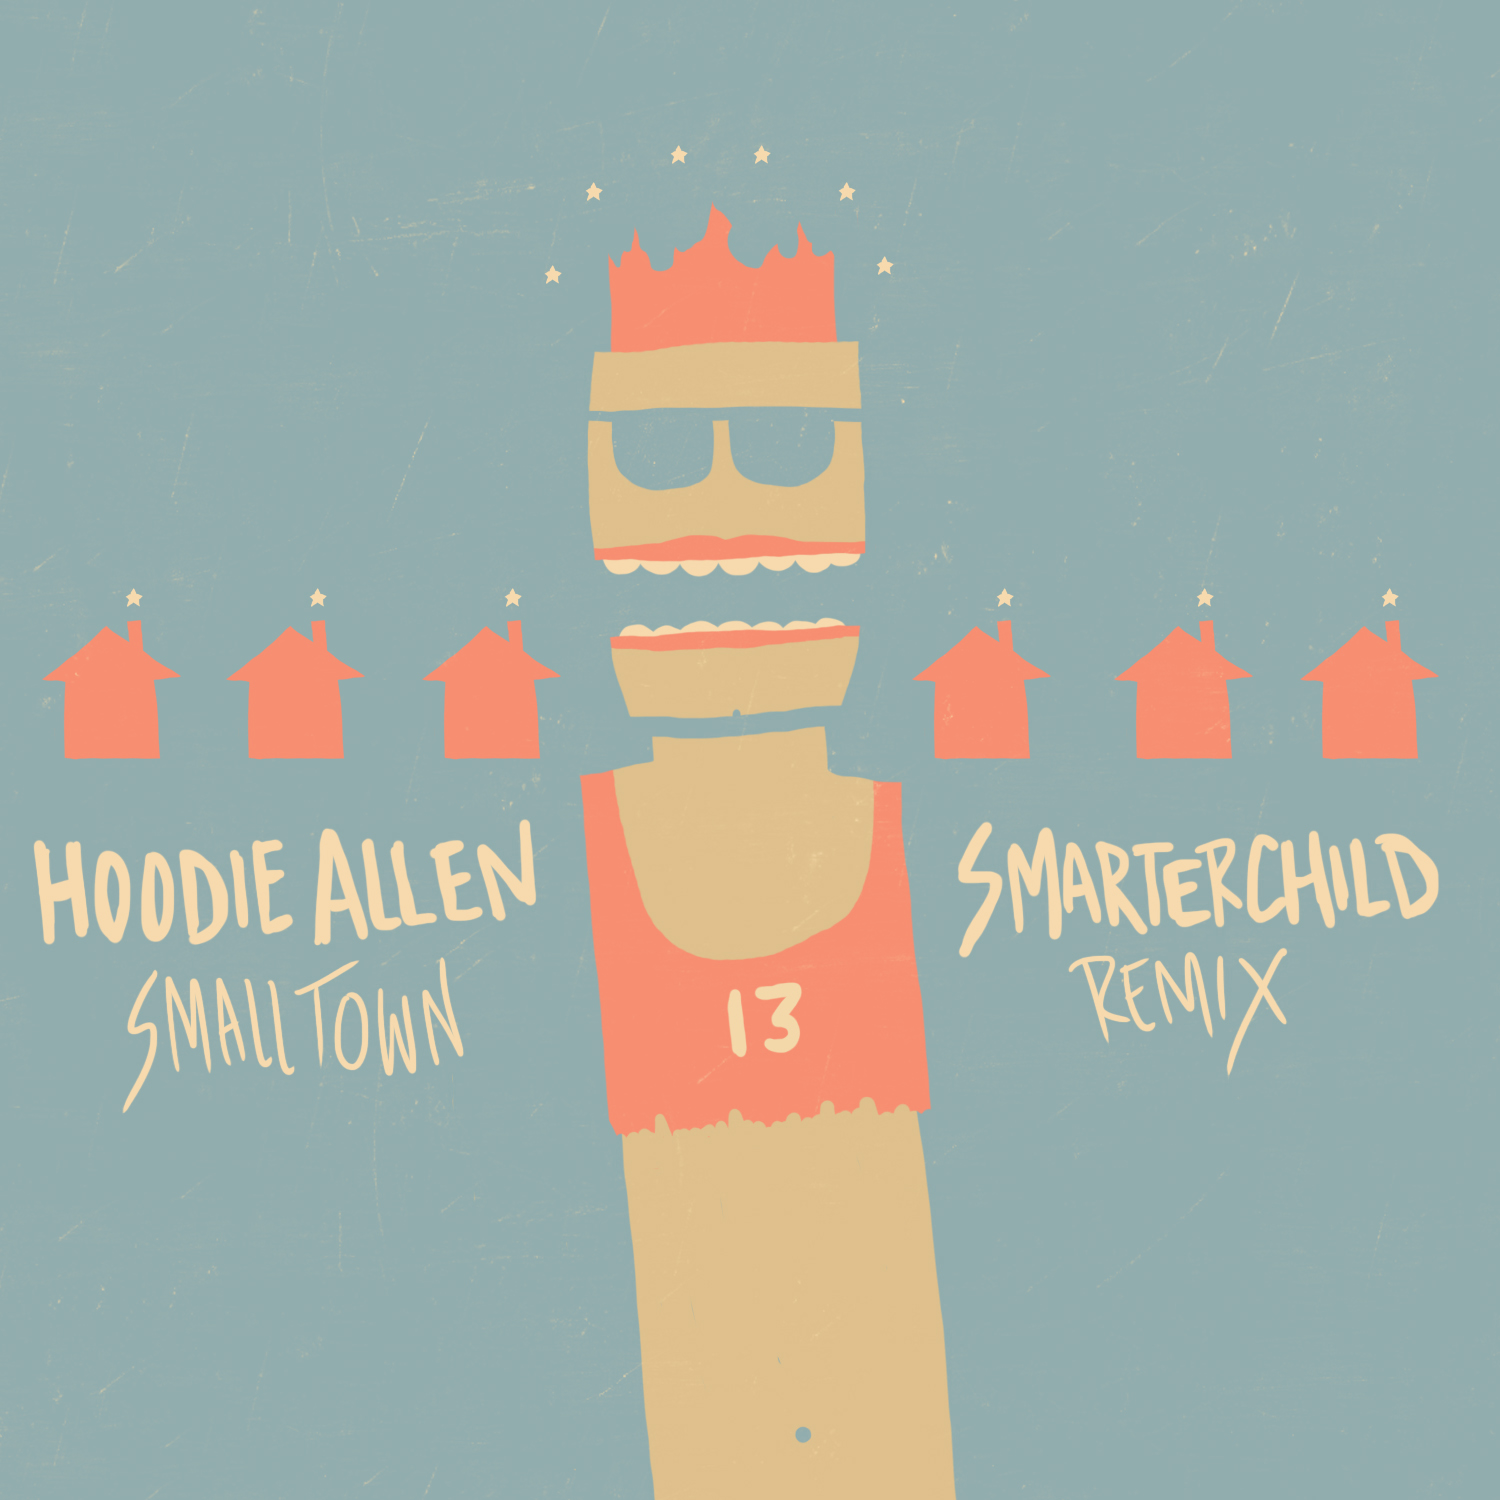 Hoodie Allen - Small Town (SmarterChild Remix)